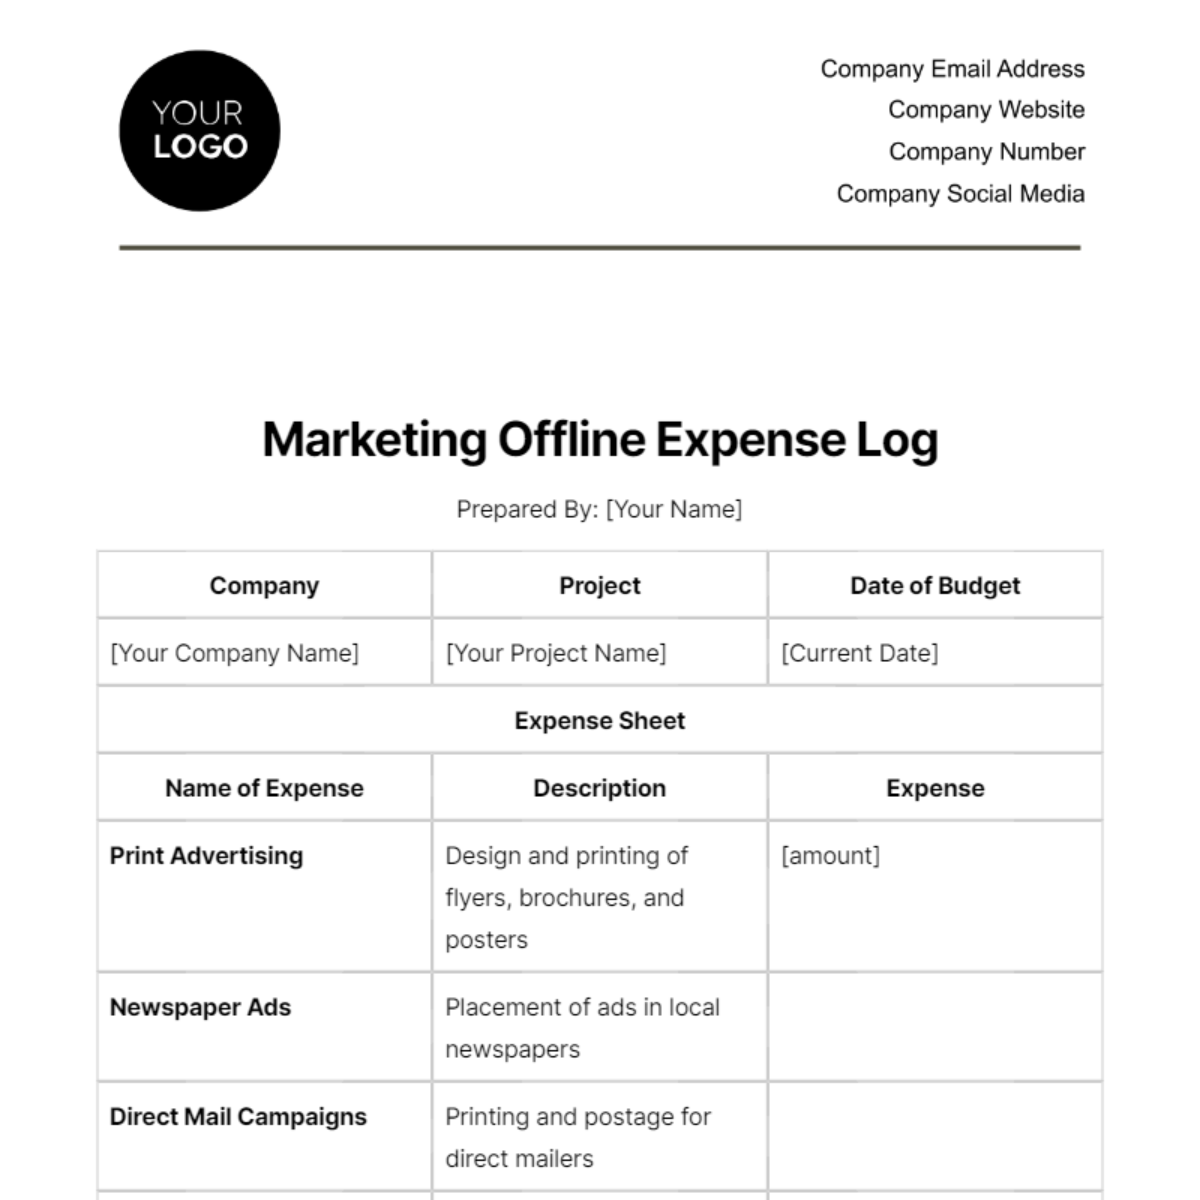 Marketing Offline Expense Log Template